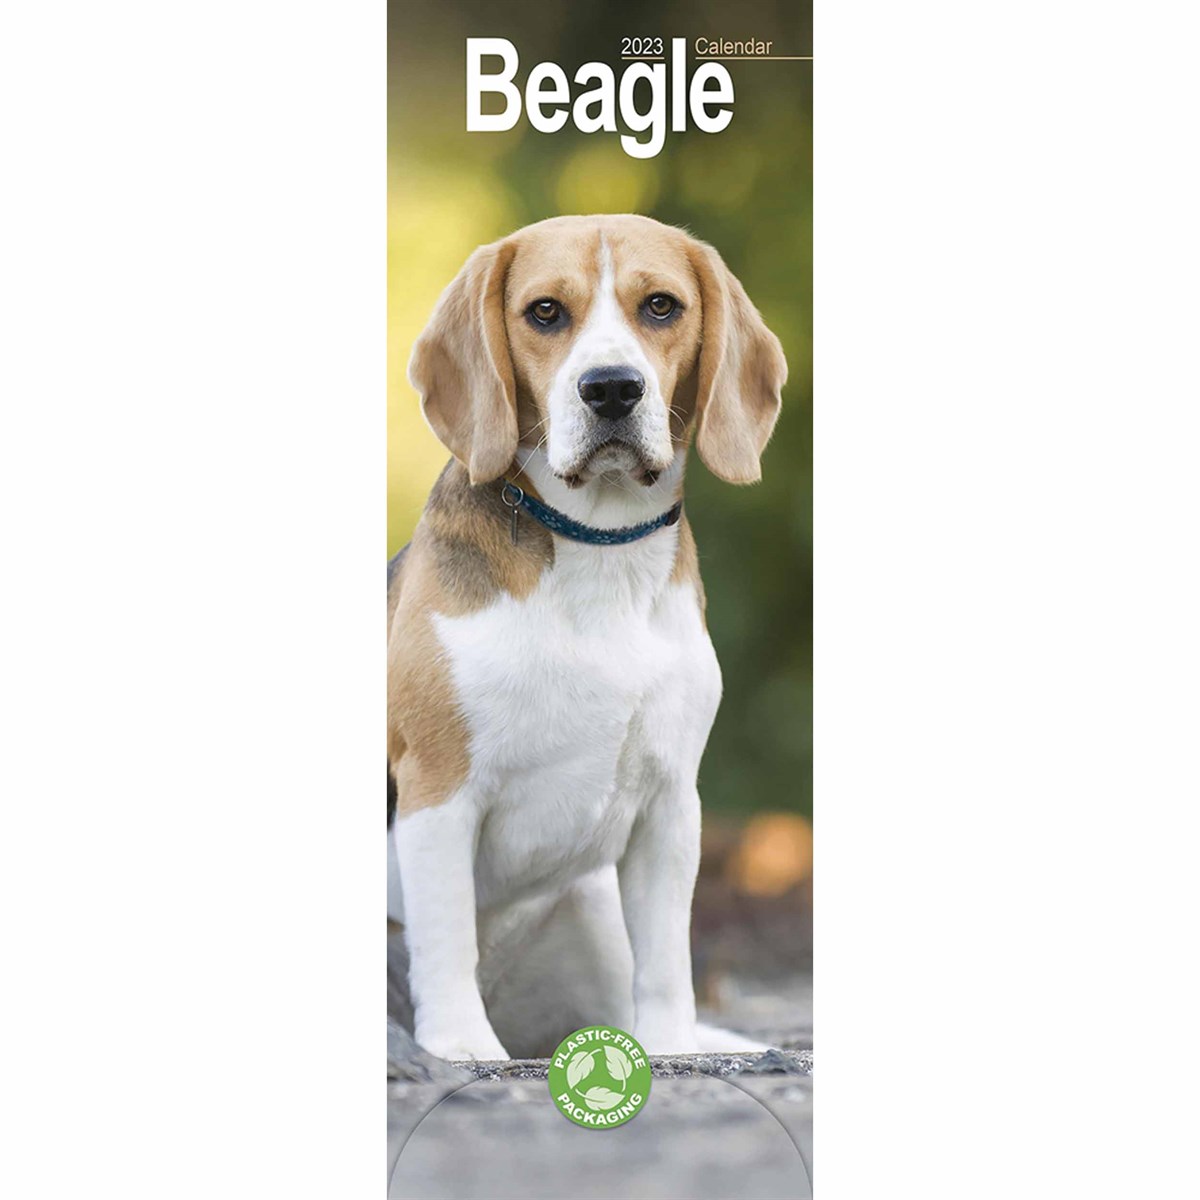 Beagle Slim 2023 Calendars